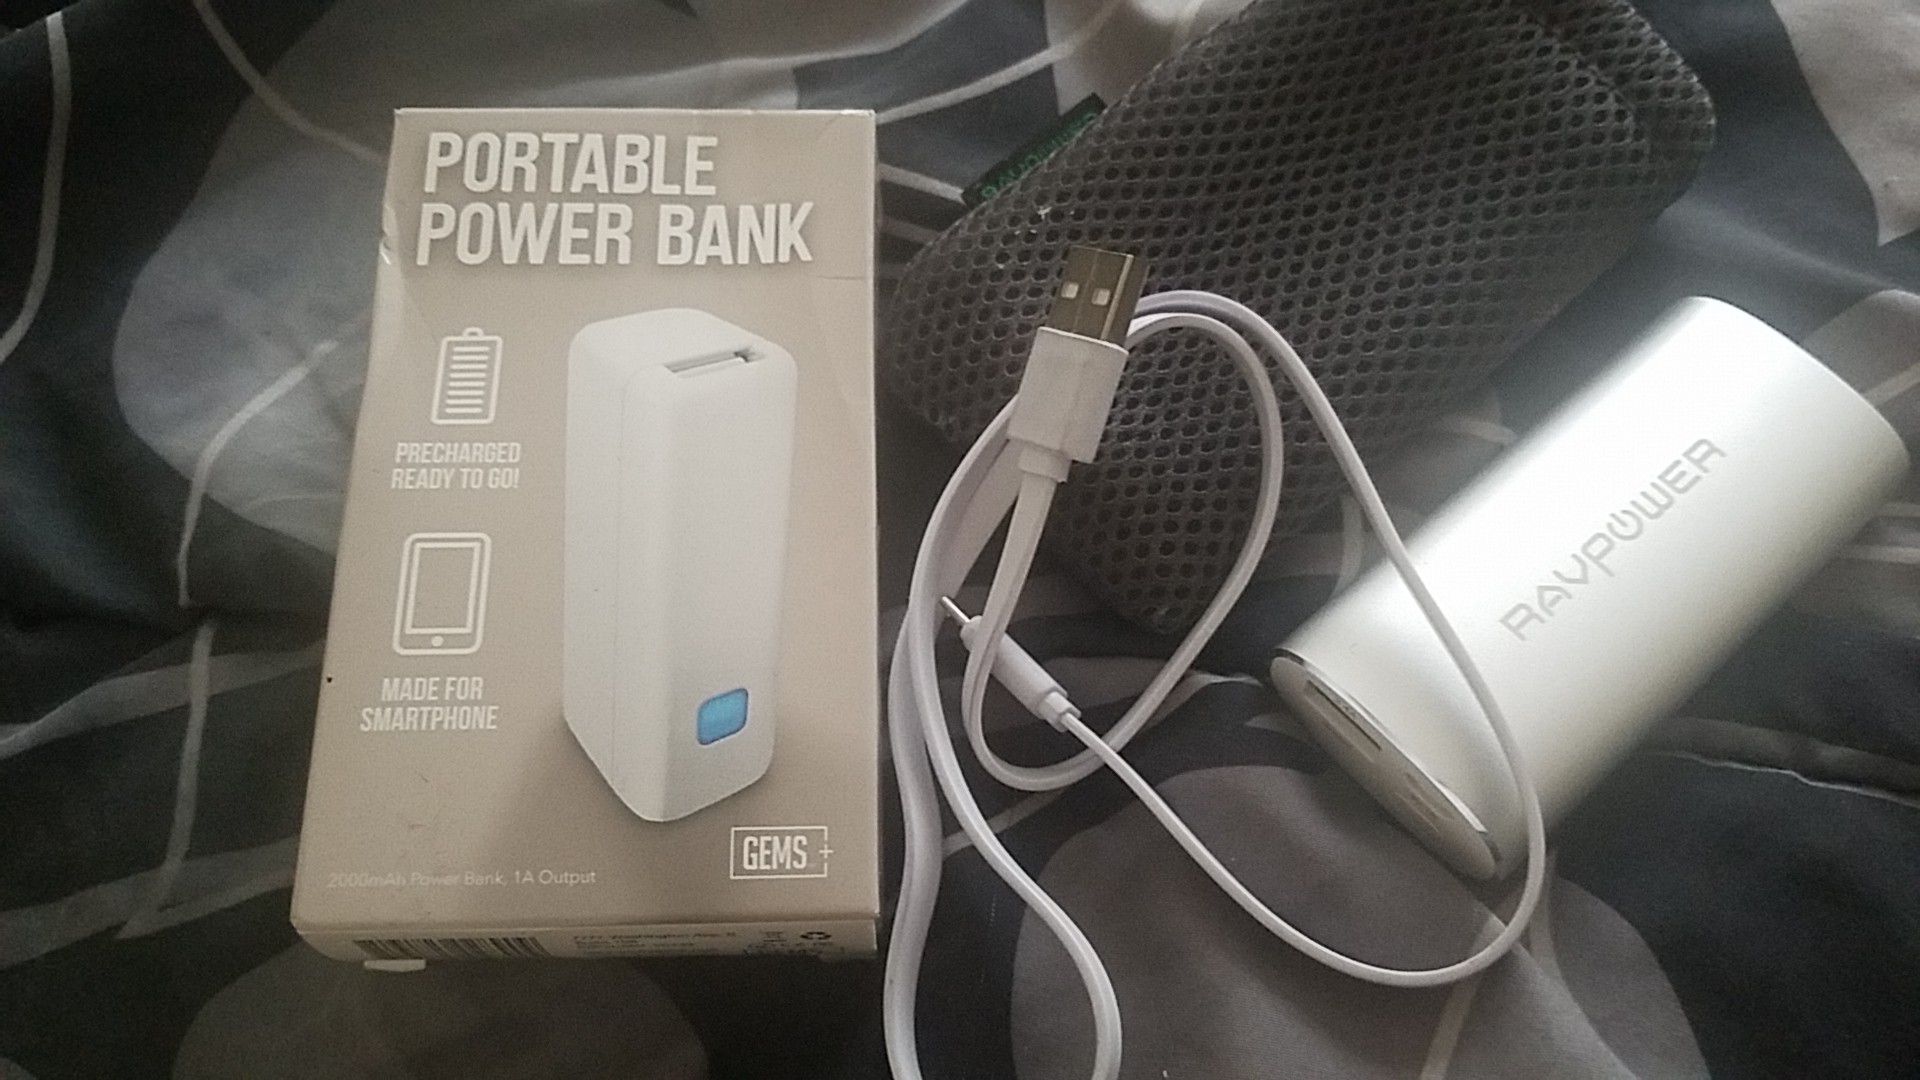 2 portable power banks brand new